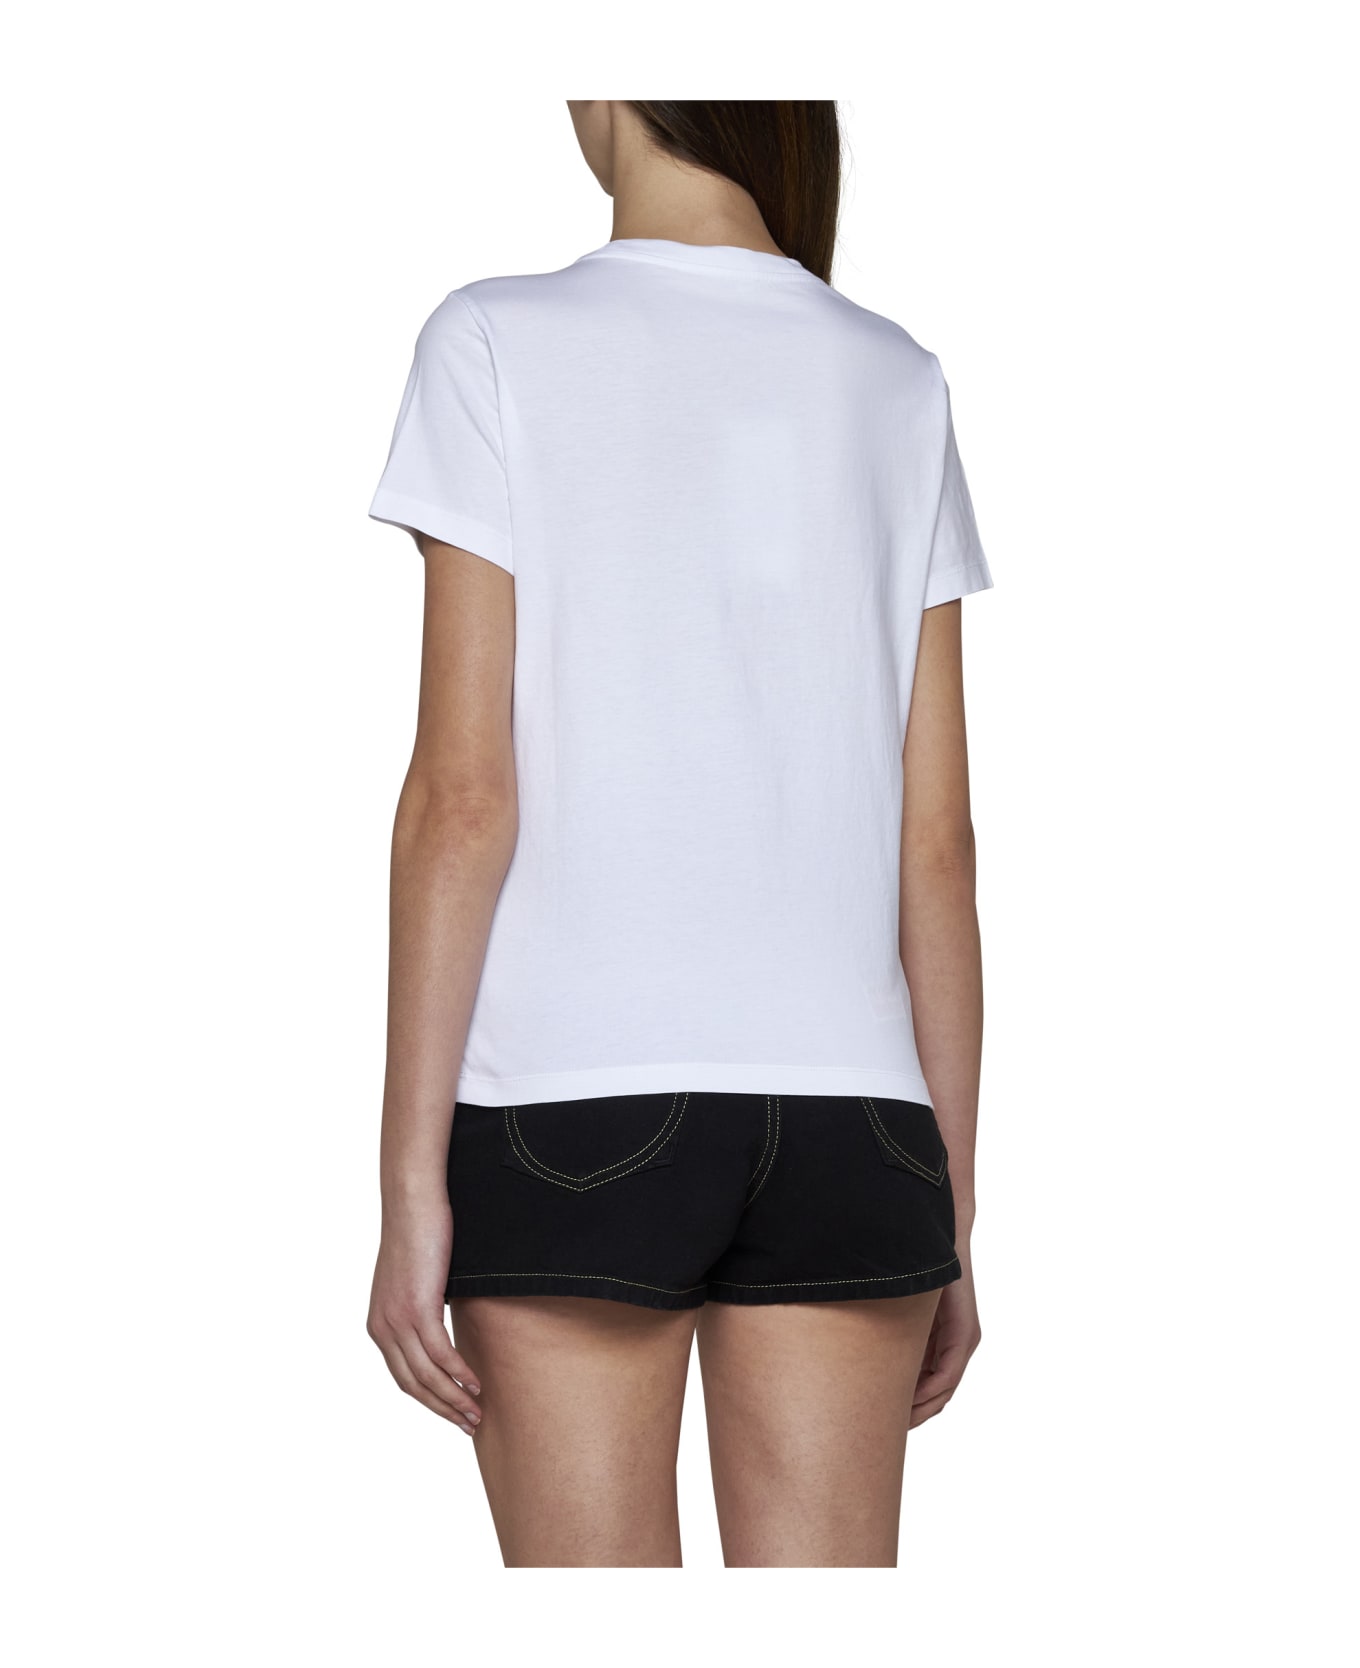 Kenzo T-Shirt - White